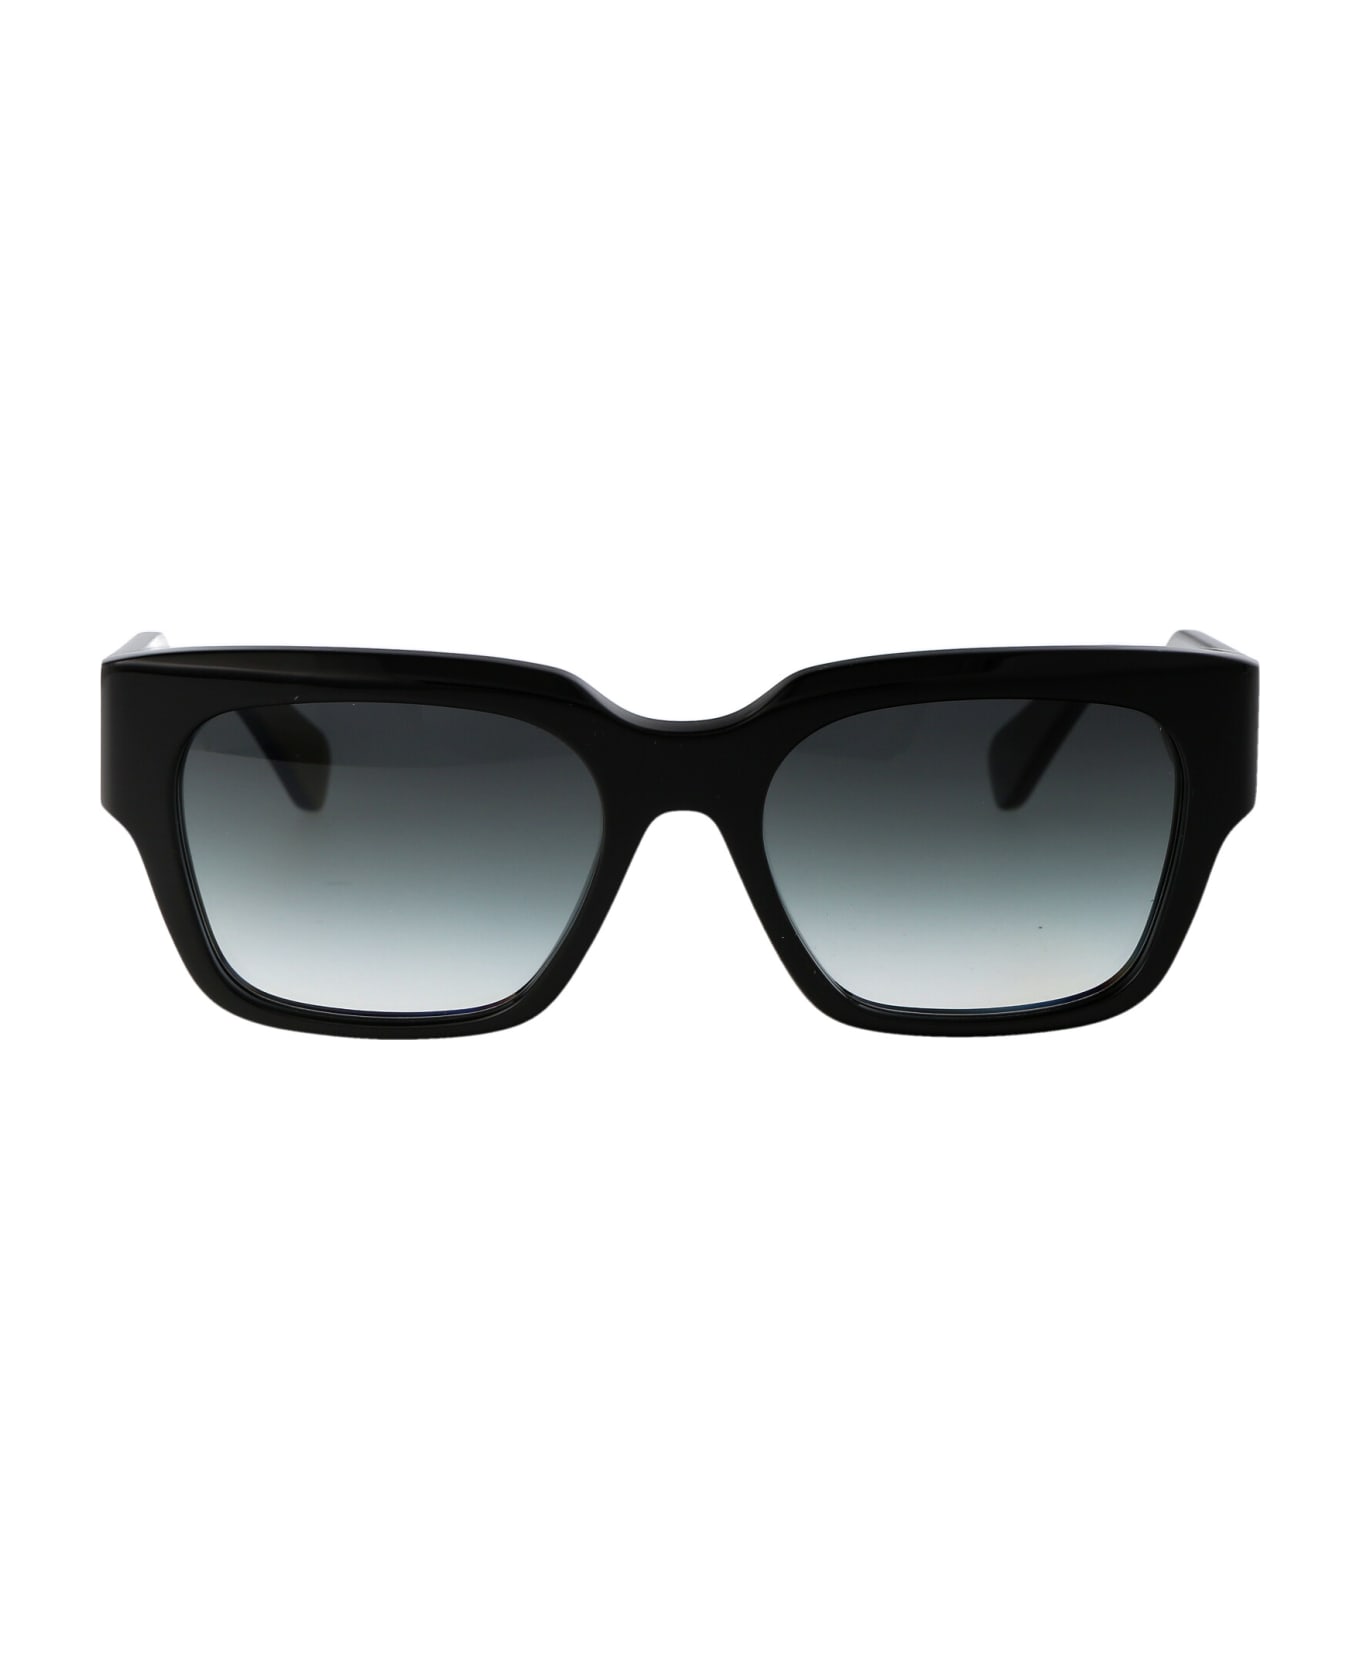 Chloé Eyewear Ch0190s Sunglasses - 001 BLACK BLACK GREY サングラス